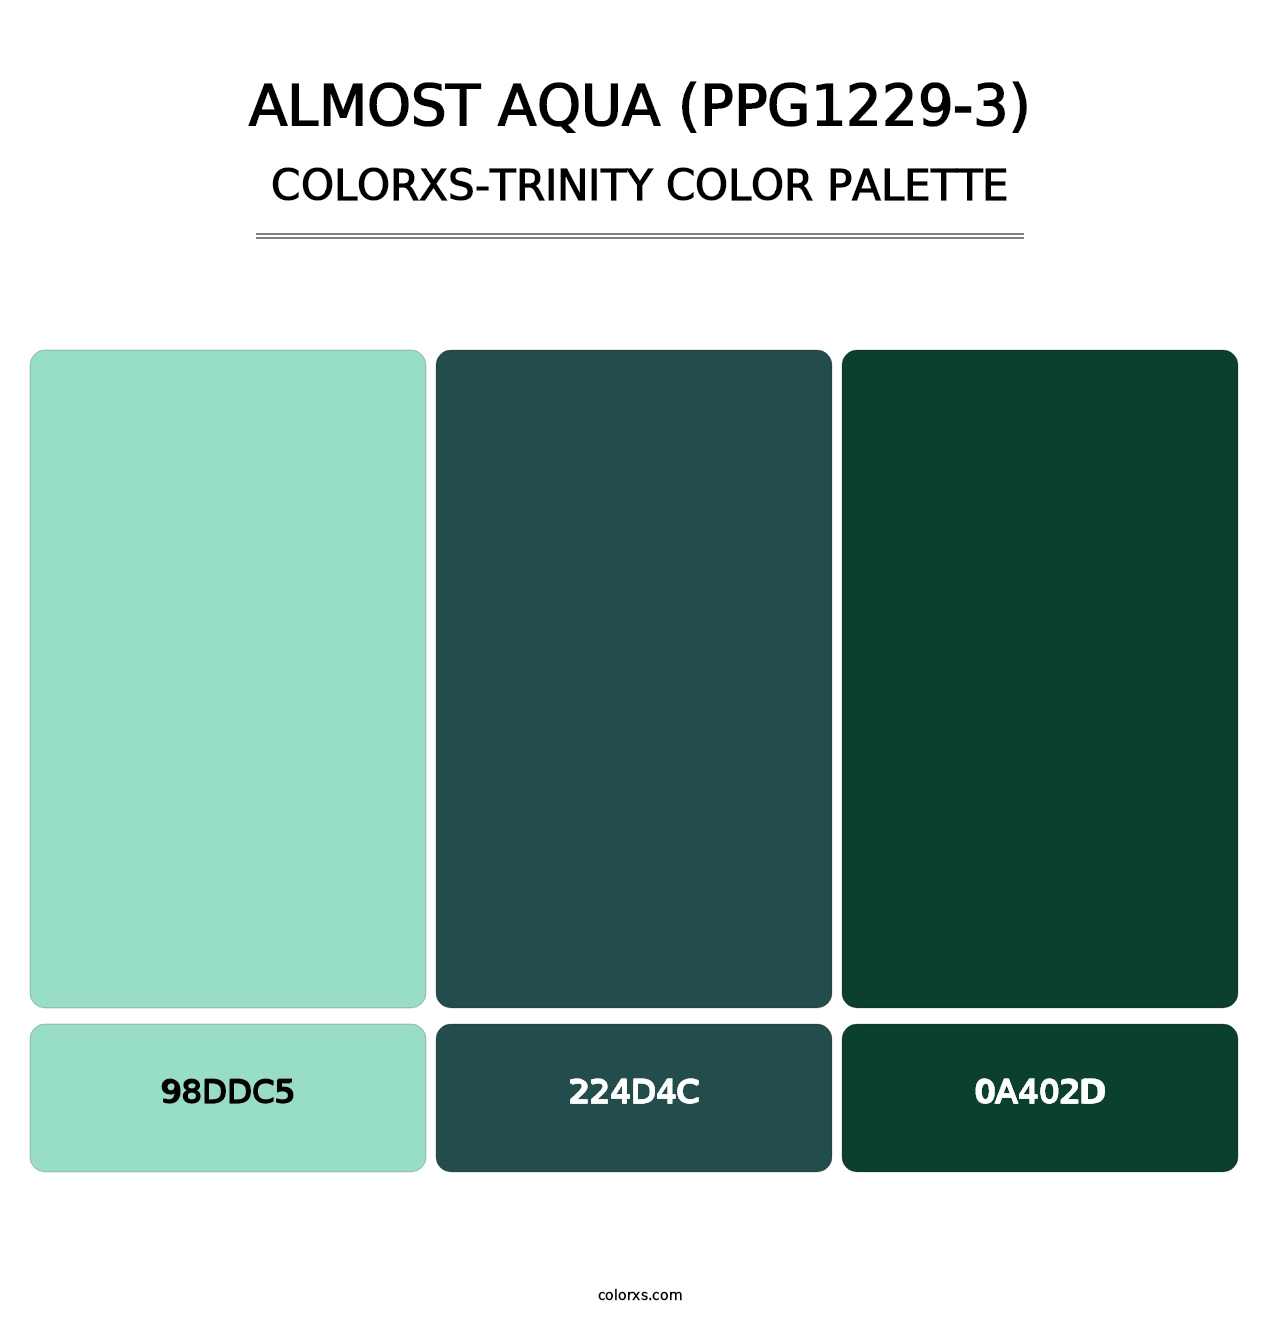 Almost Aqua (PPG1229-3) - Colorxs Trinity Palette